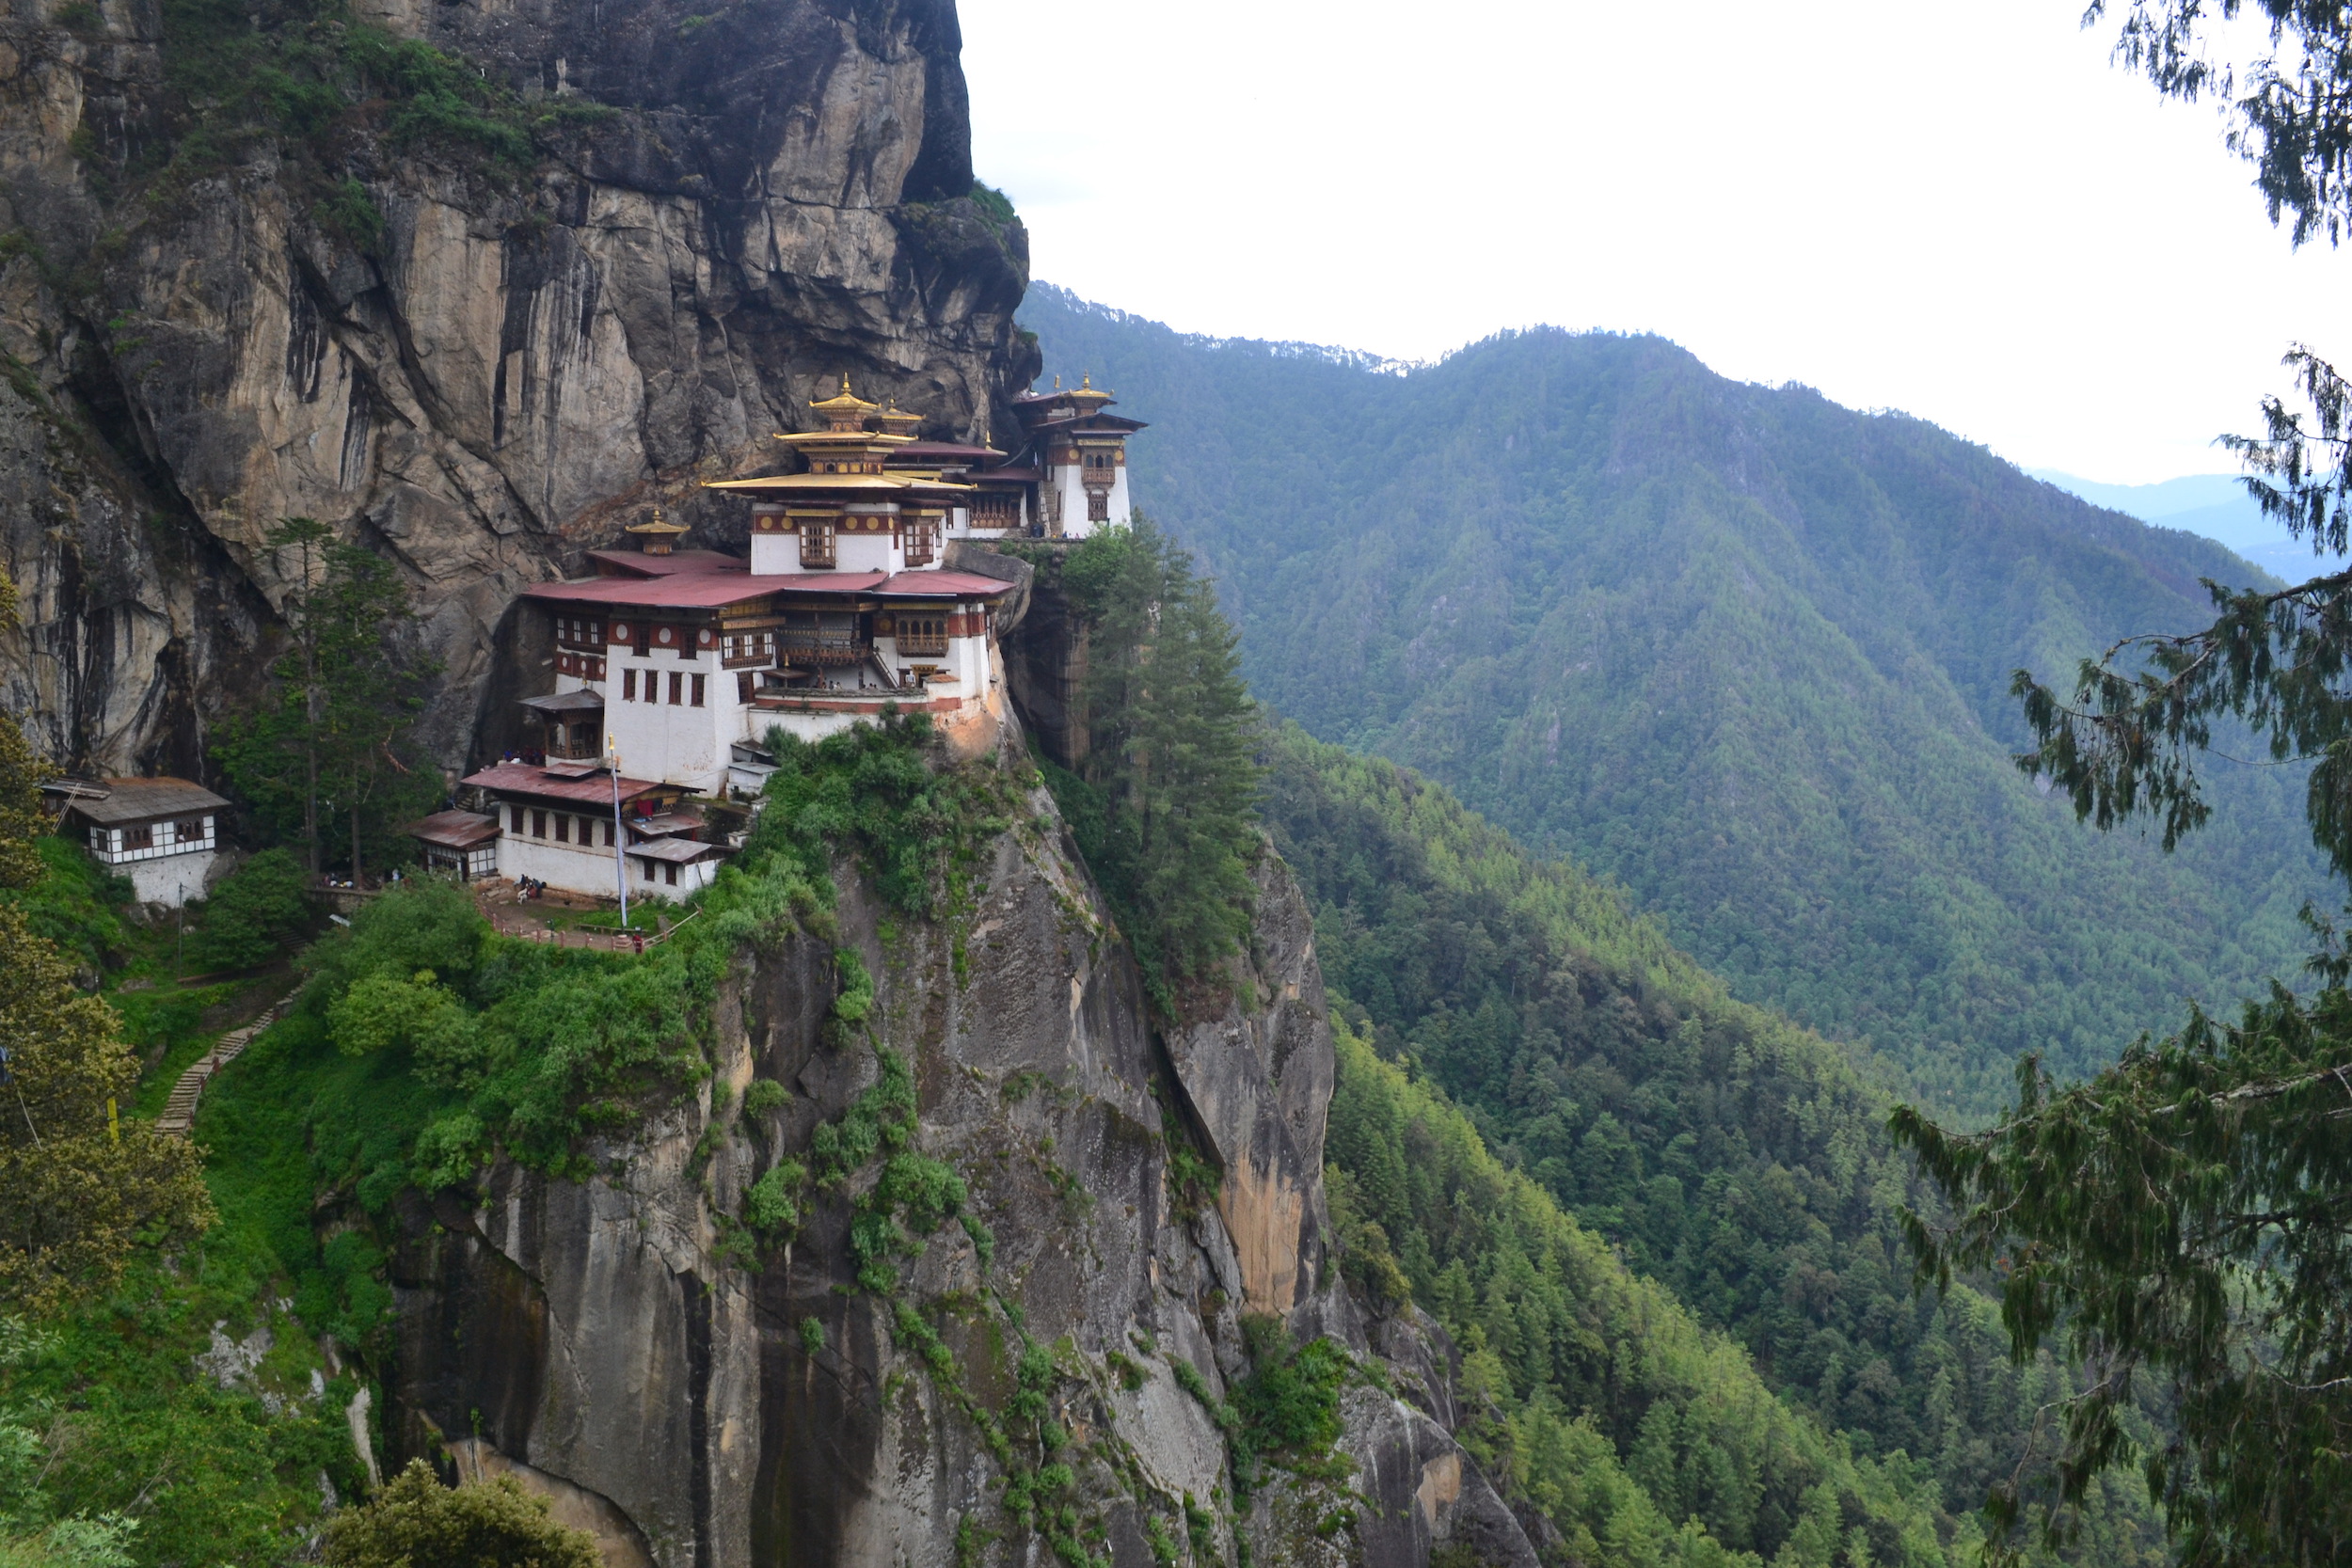 Population bhutan